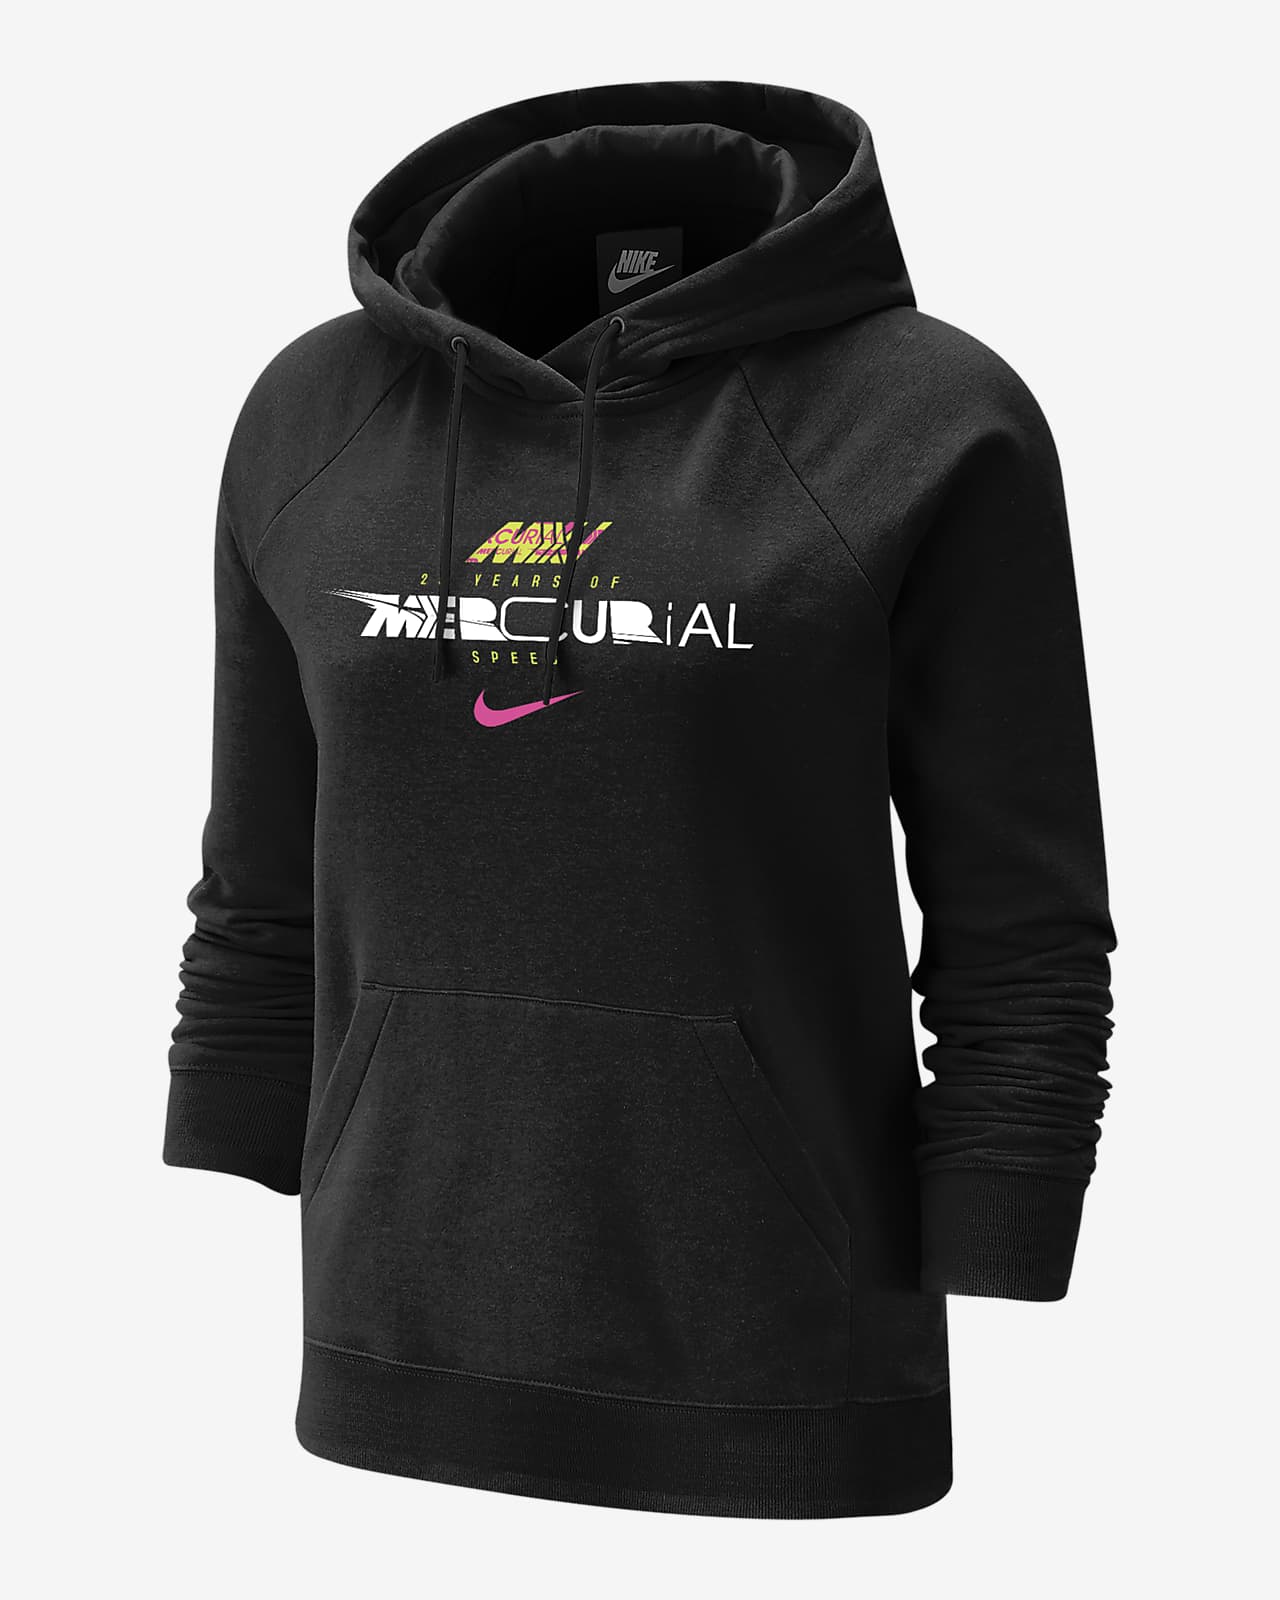 Sudadera con gorro para mujer Nike Mercurial 25th Anniversary